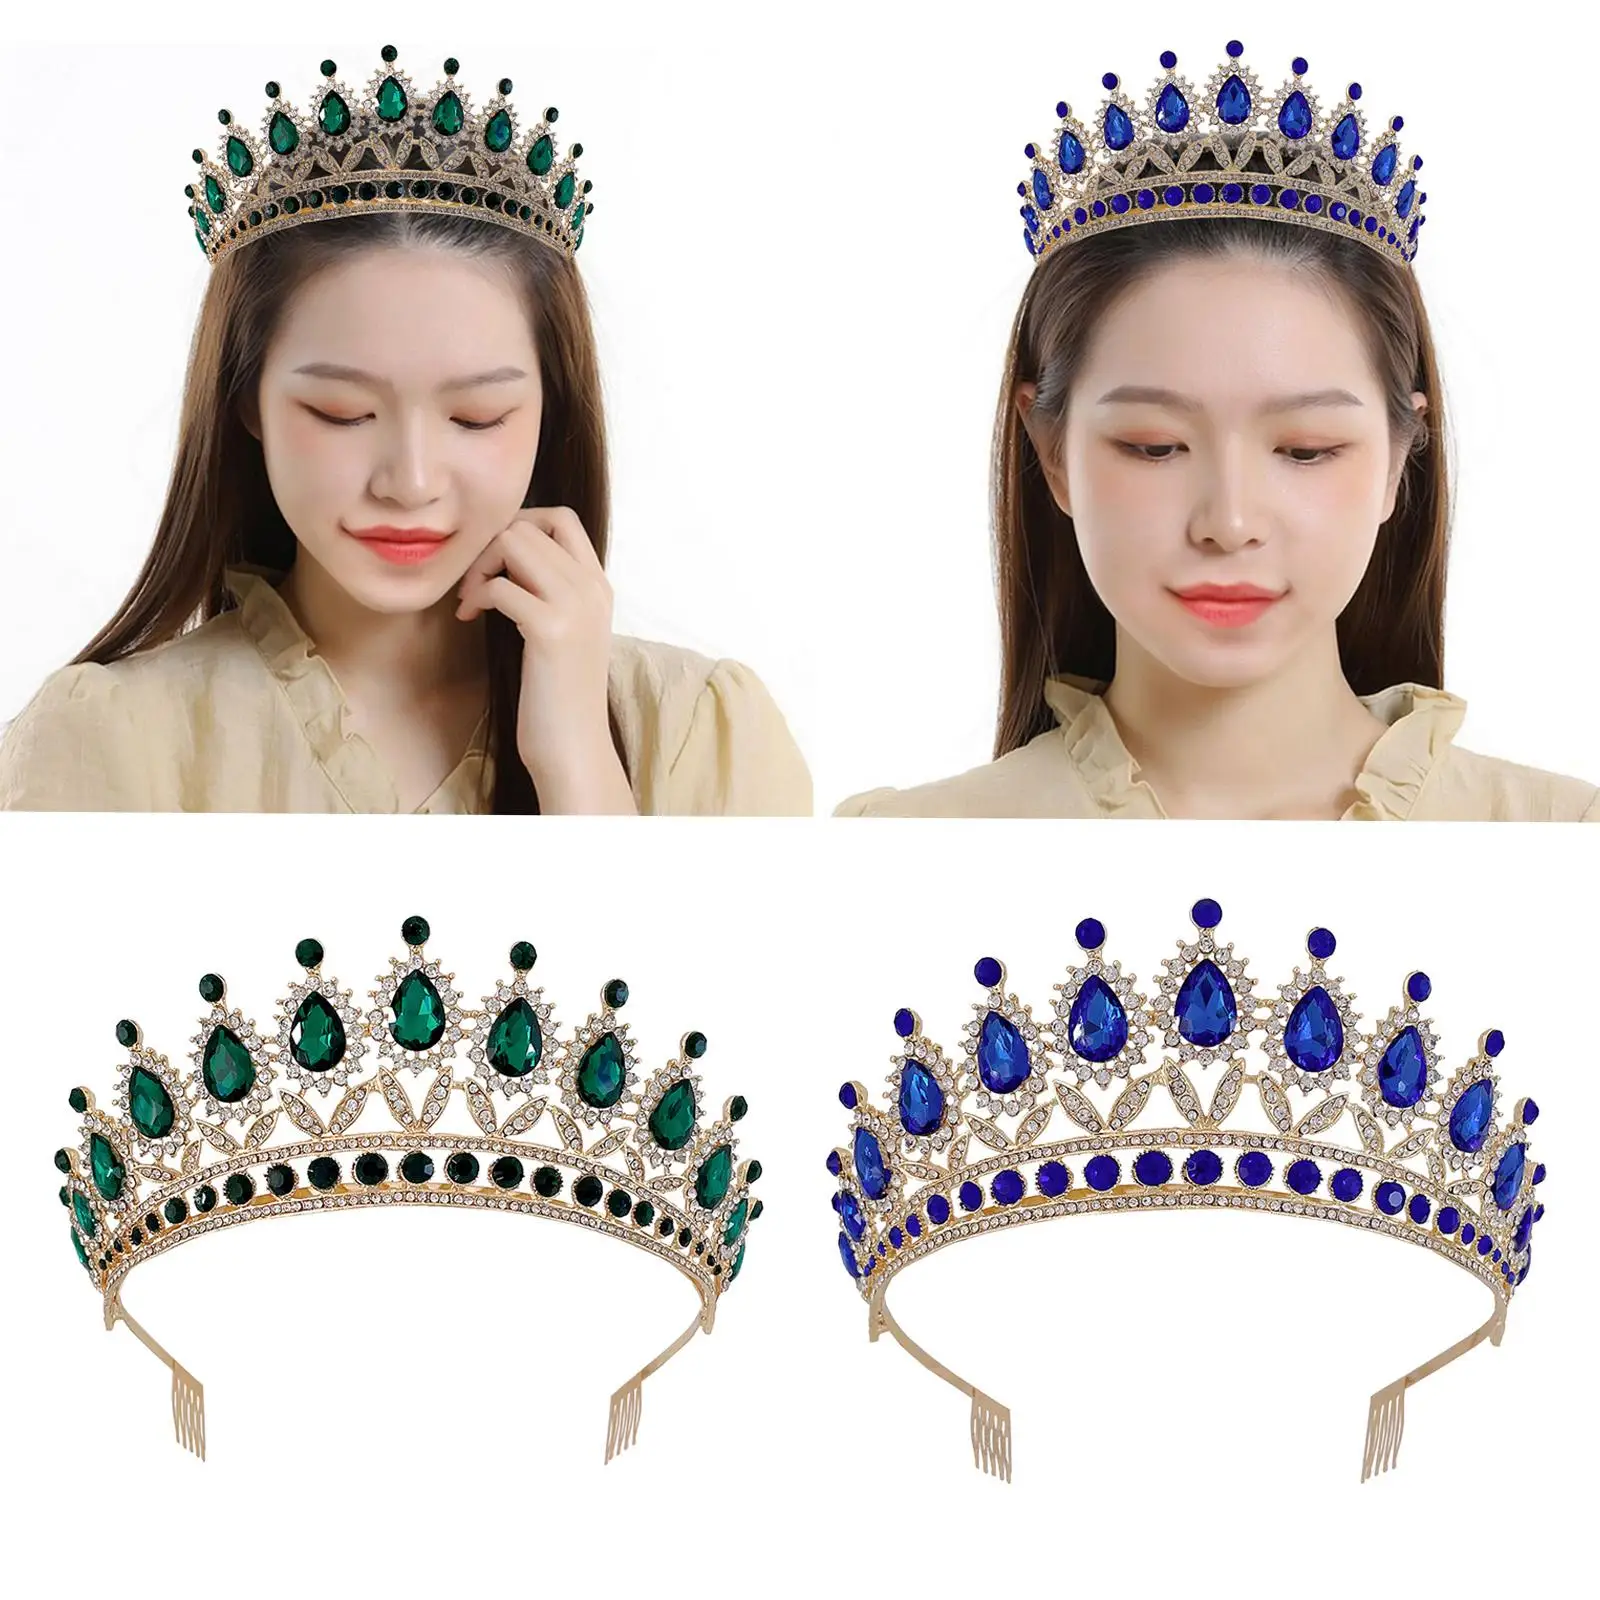 Rhinestone Tiara Headwear Gorgeous Shiny Vintage Style Headpiece Tiara Crown Tiara Crown Headband for Photography Props